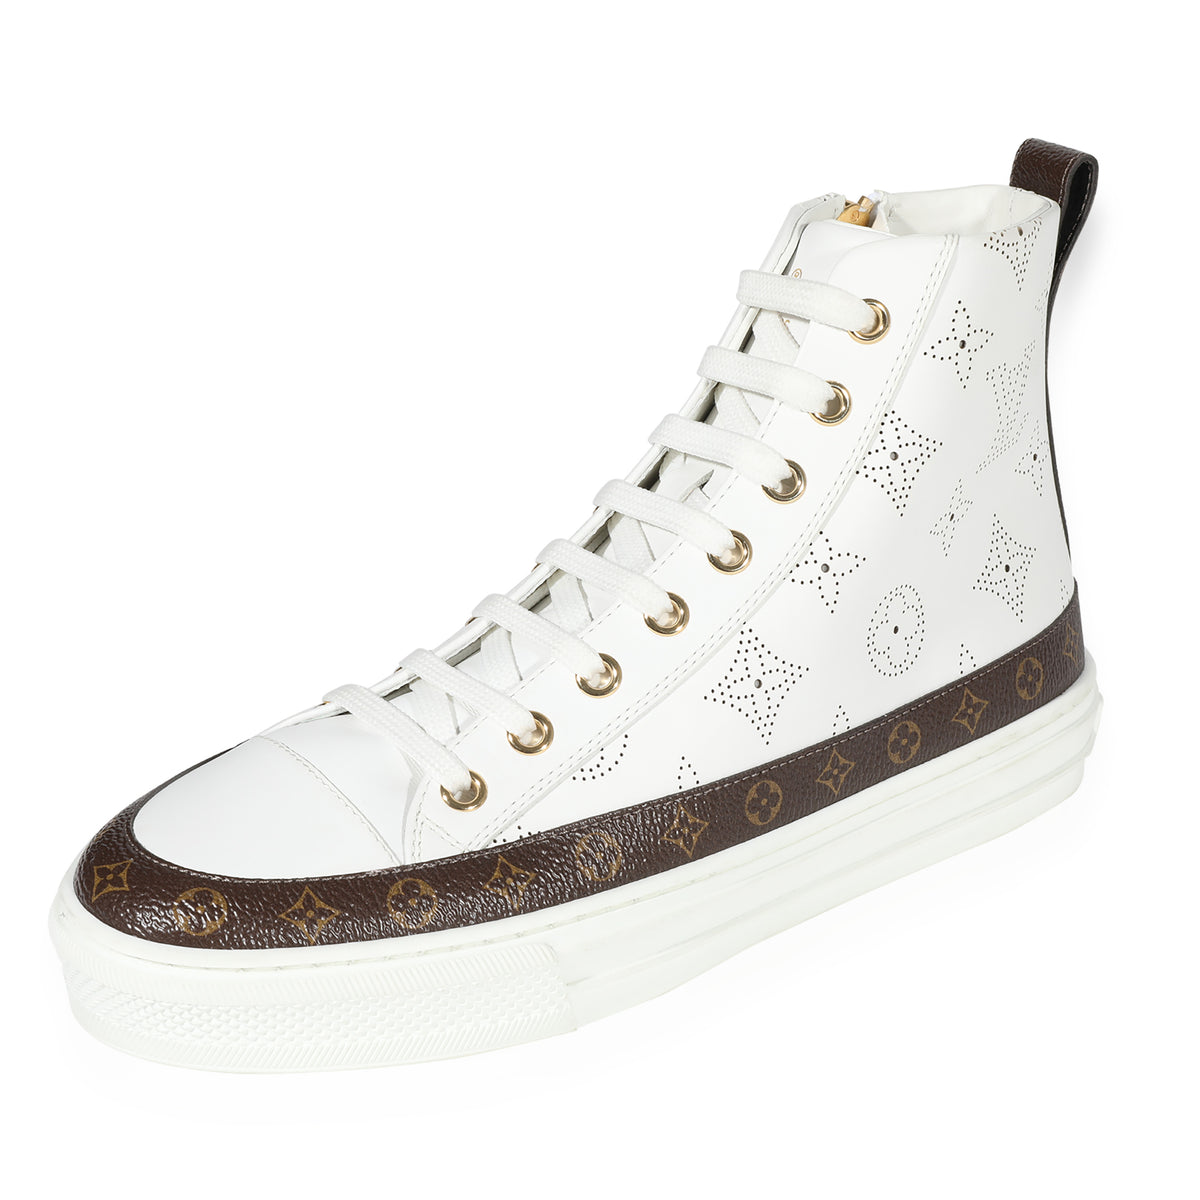 Louis Vuitton - Stellar Monogram Embossed Calf Leather Sneakers